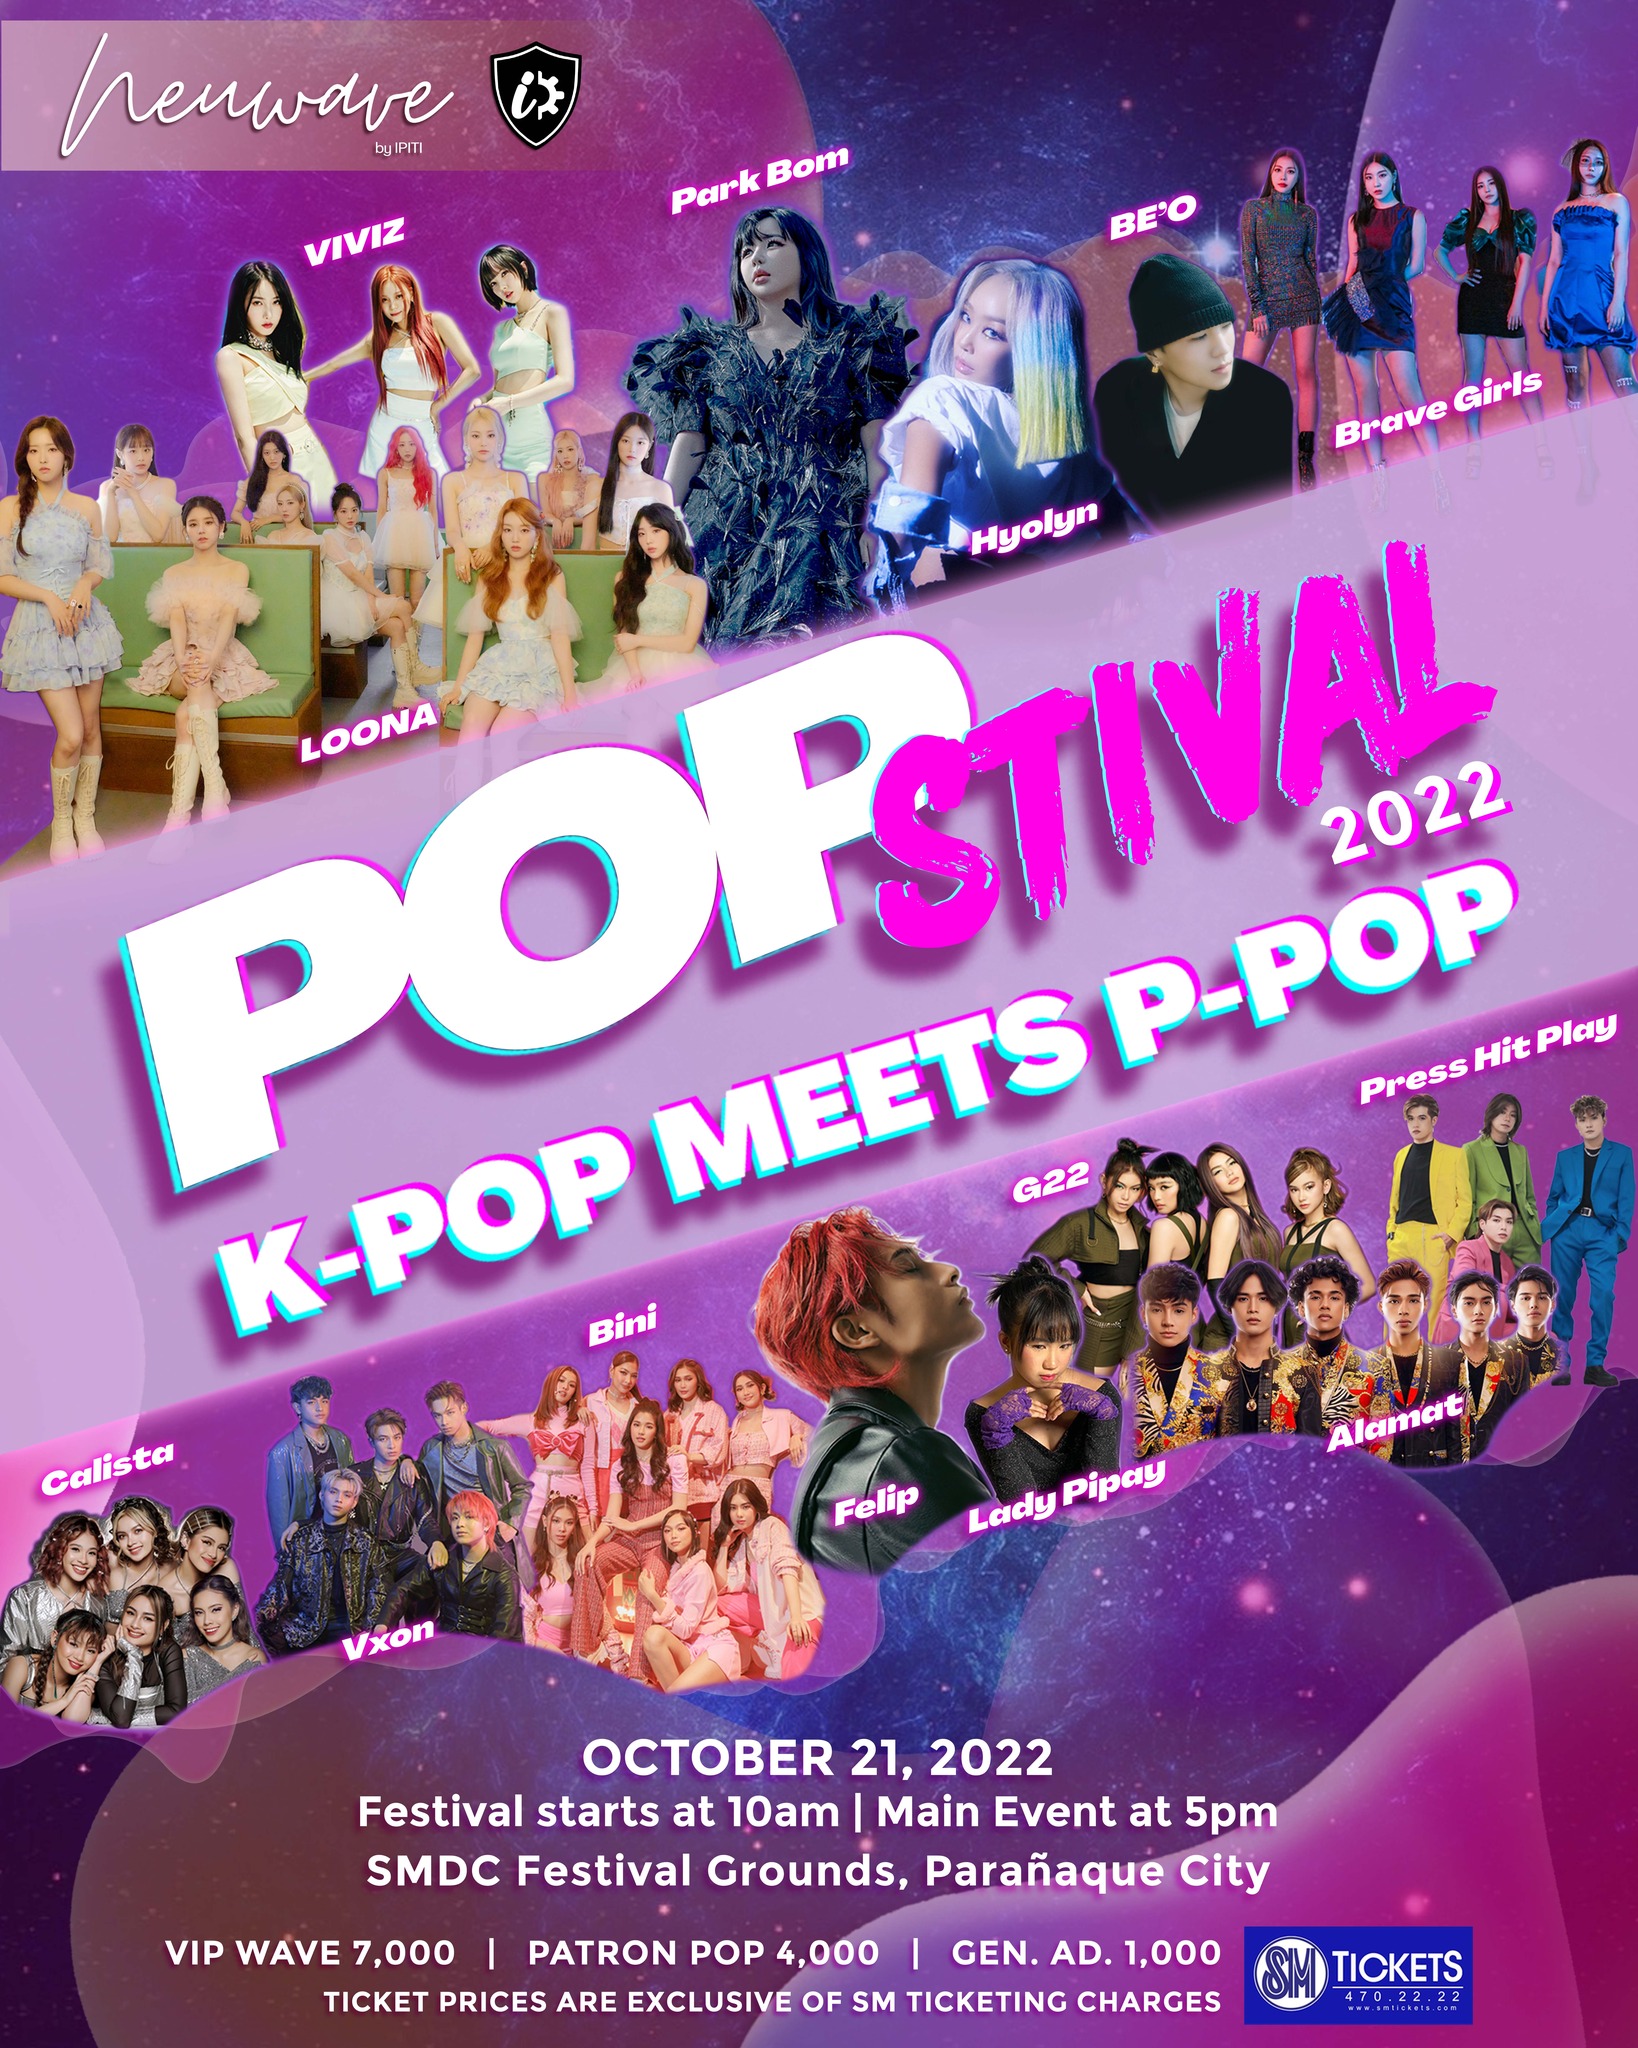 7 Metro Manila Events This October 2022 - POPstival 2022